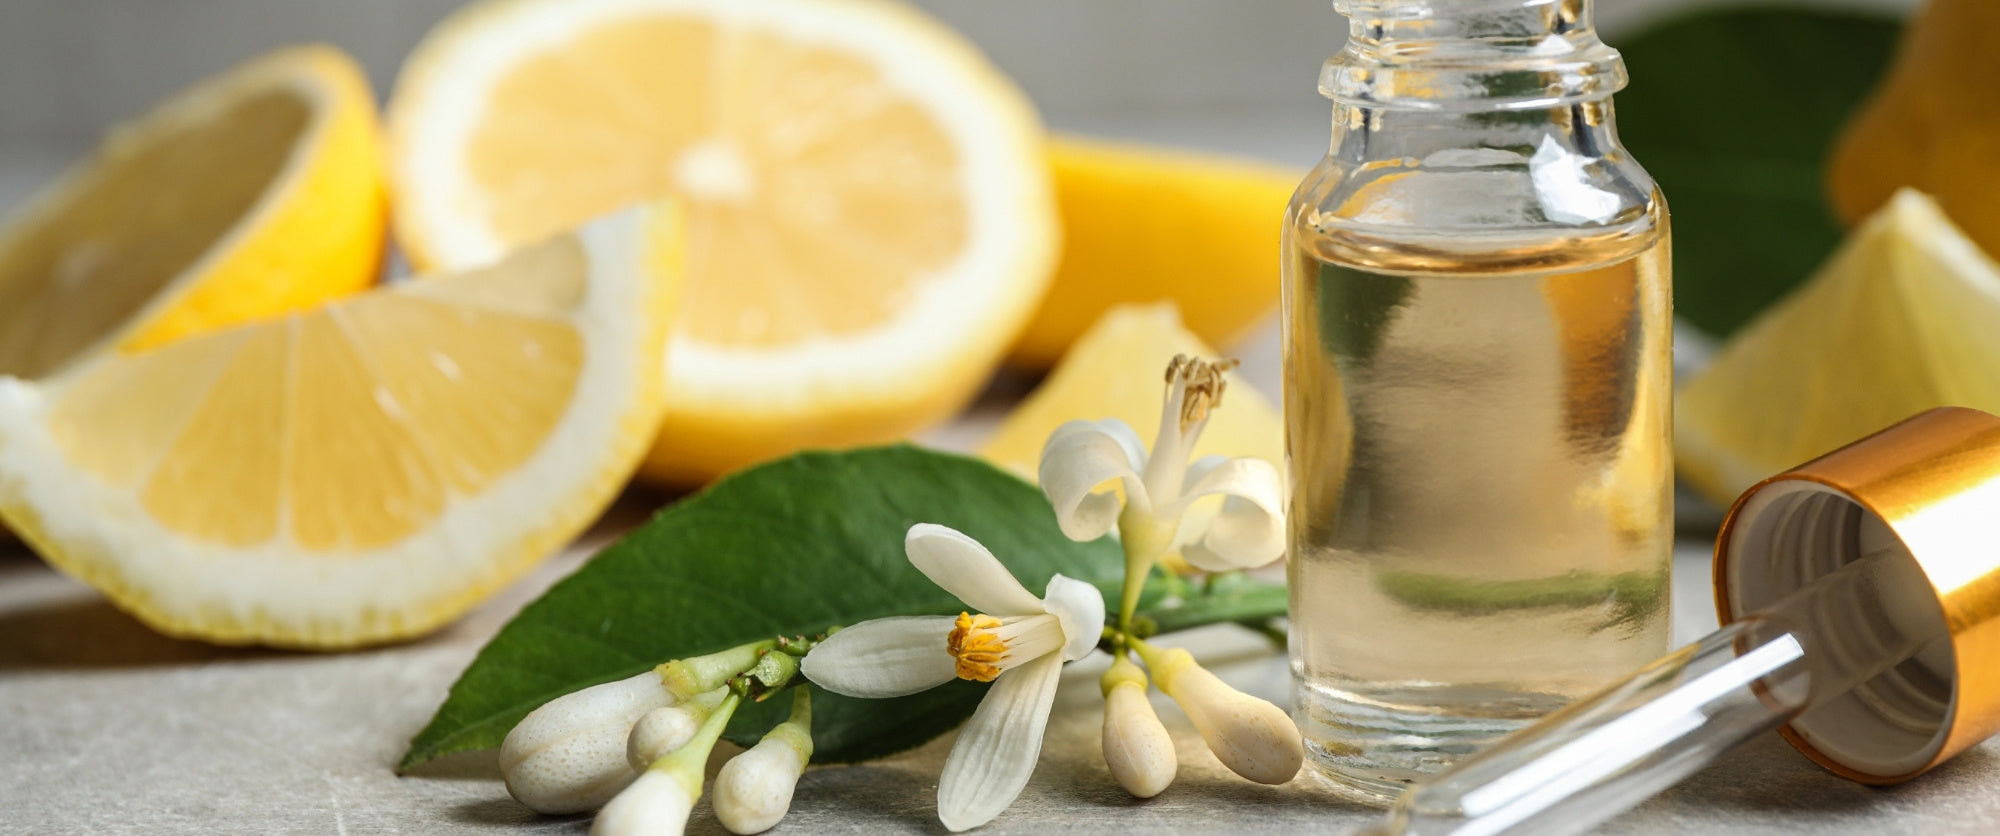 Citrus limon peel oil – Officina dei saponi